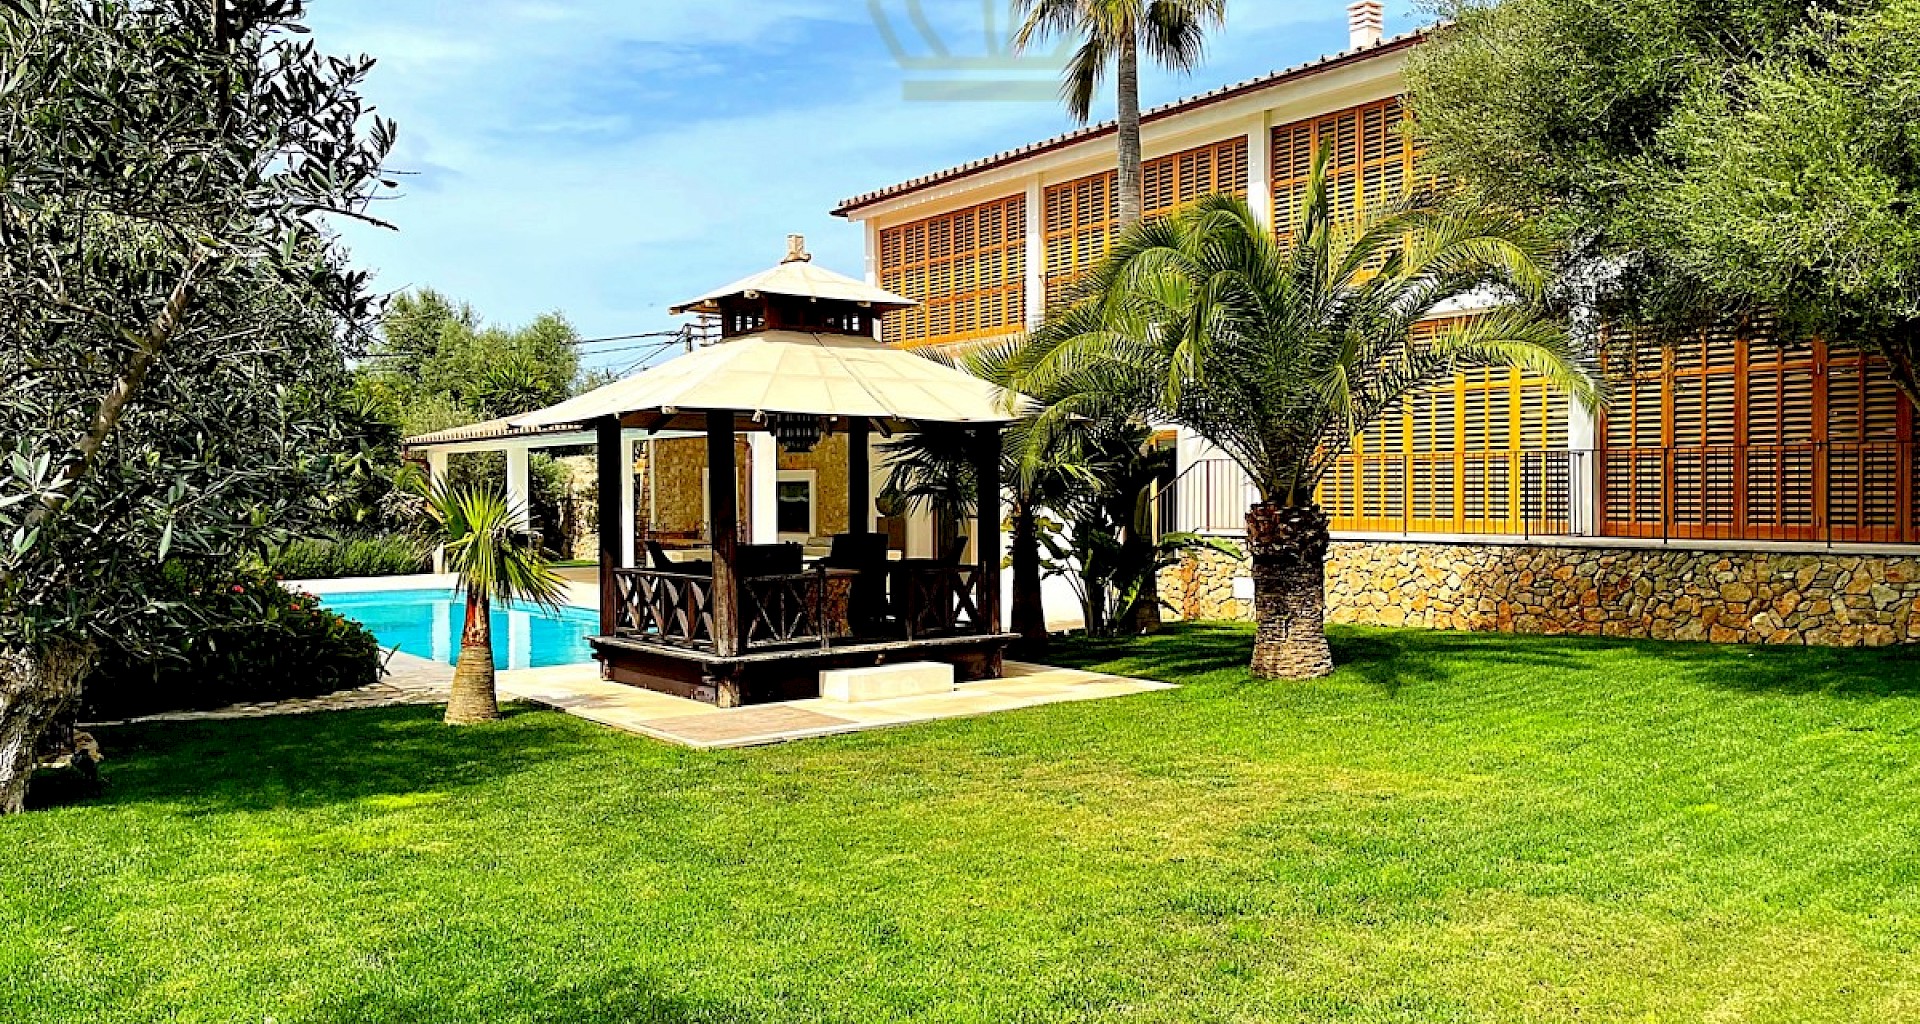 KROHN & LUEDEMANN Villa mediterránea señorial en Calvia Villa Calvia Garten